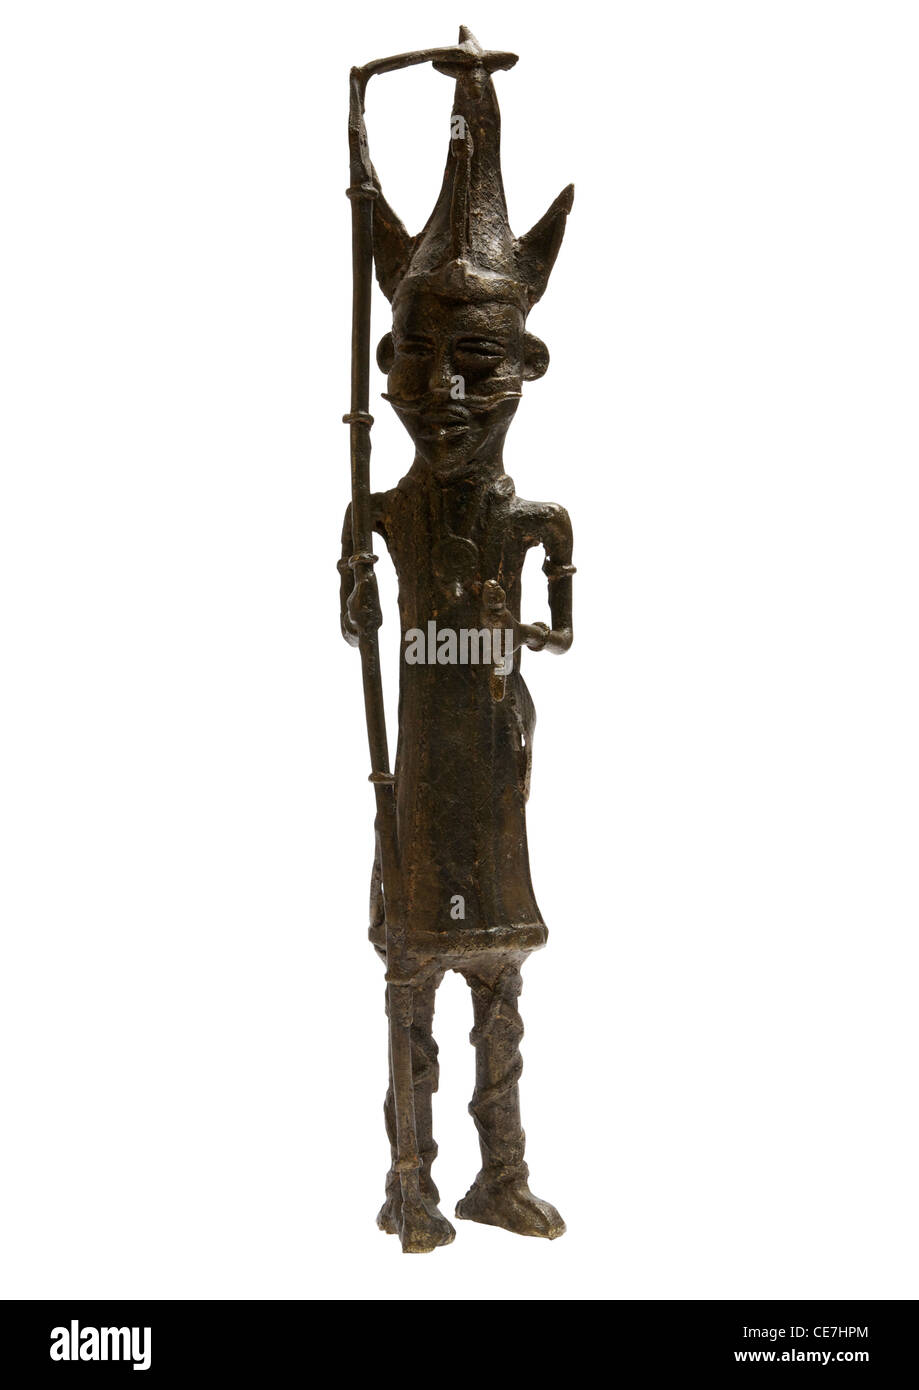 Cast brass Ghanaian figurine on white background Stock Photo